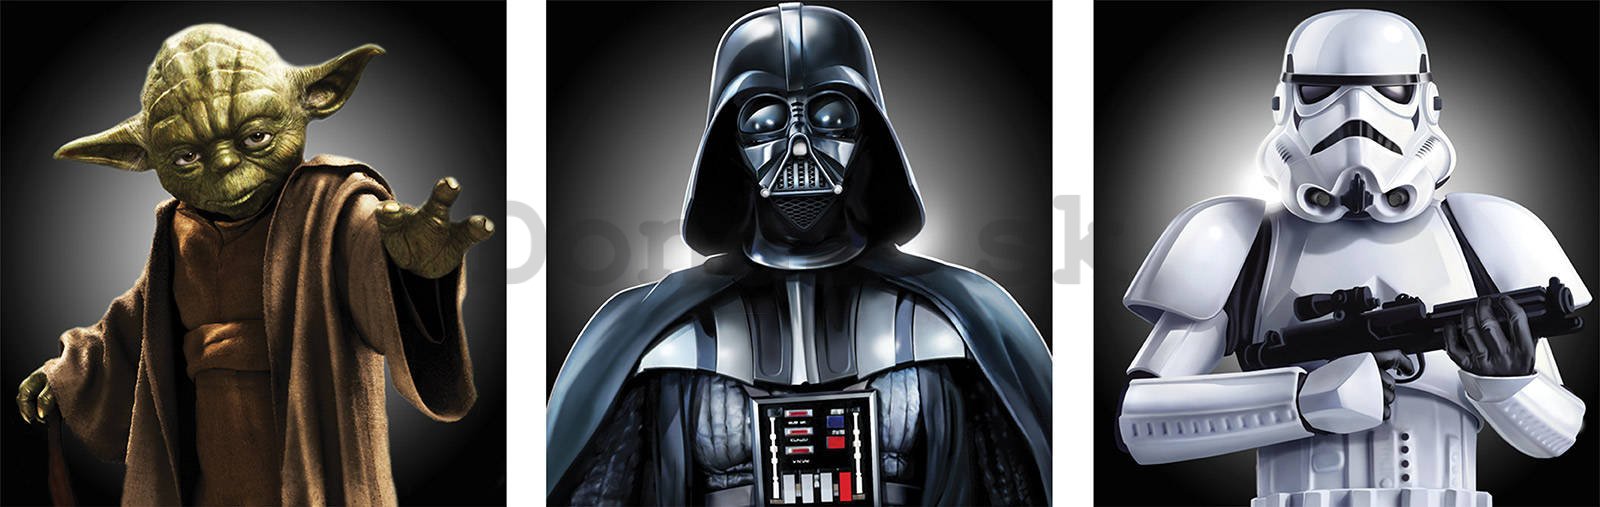 Obraz na plátne: Star Wars (Yoda, Darth Vader, Stormtrooper) - set 3ks 30x30 cm